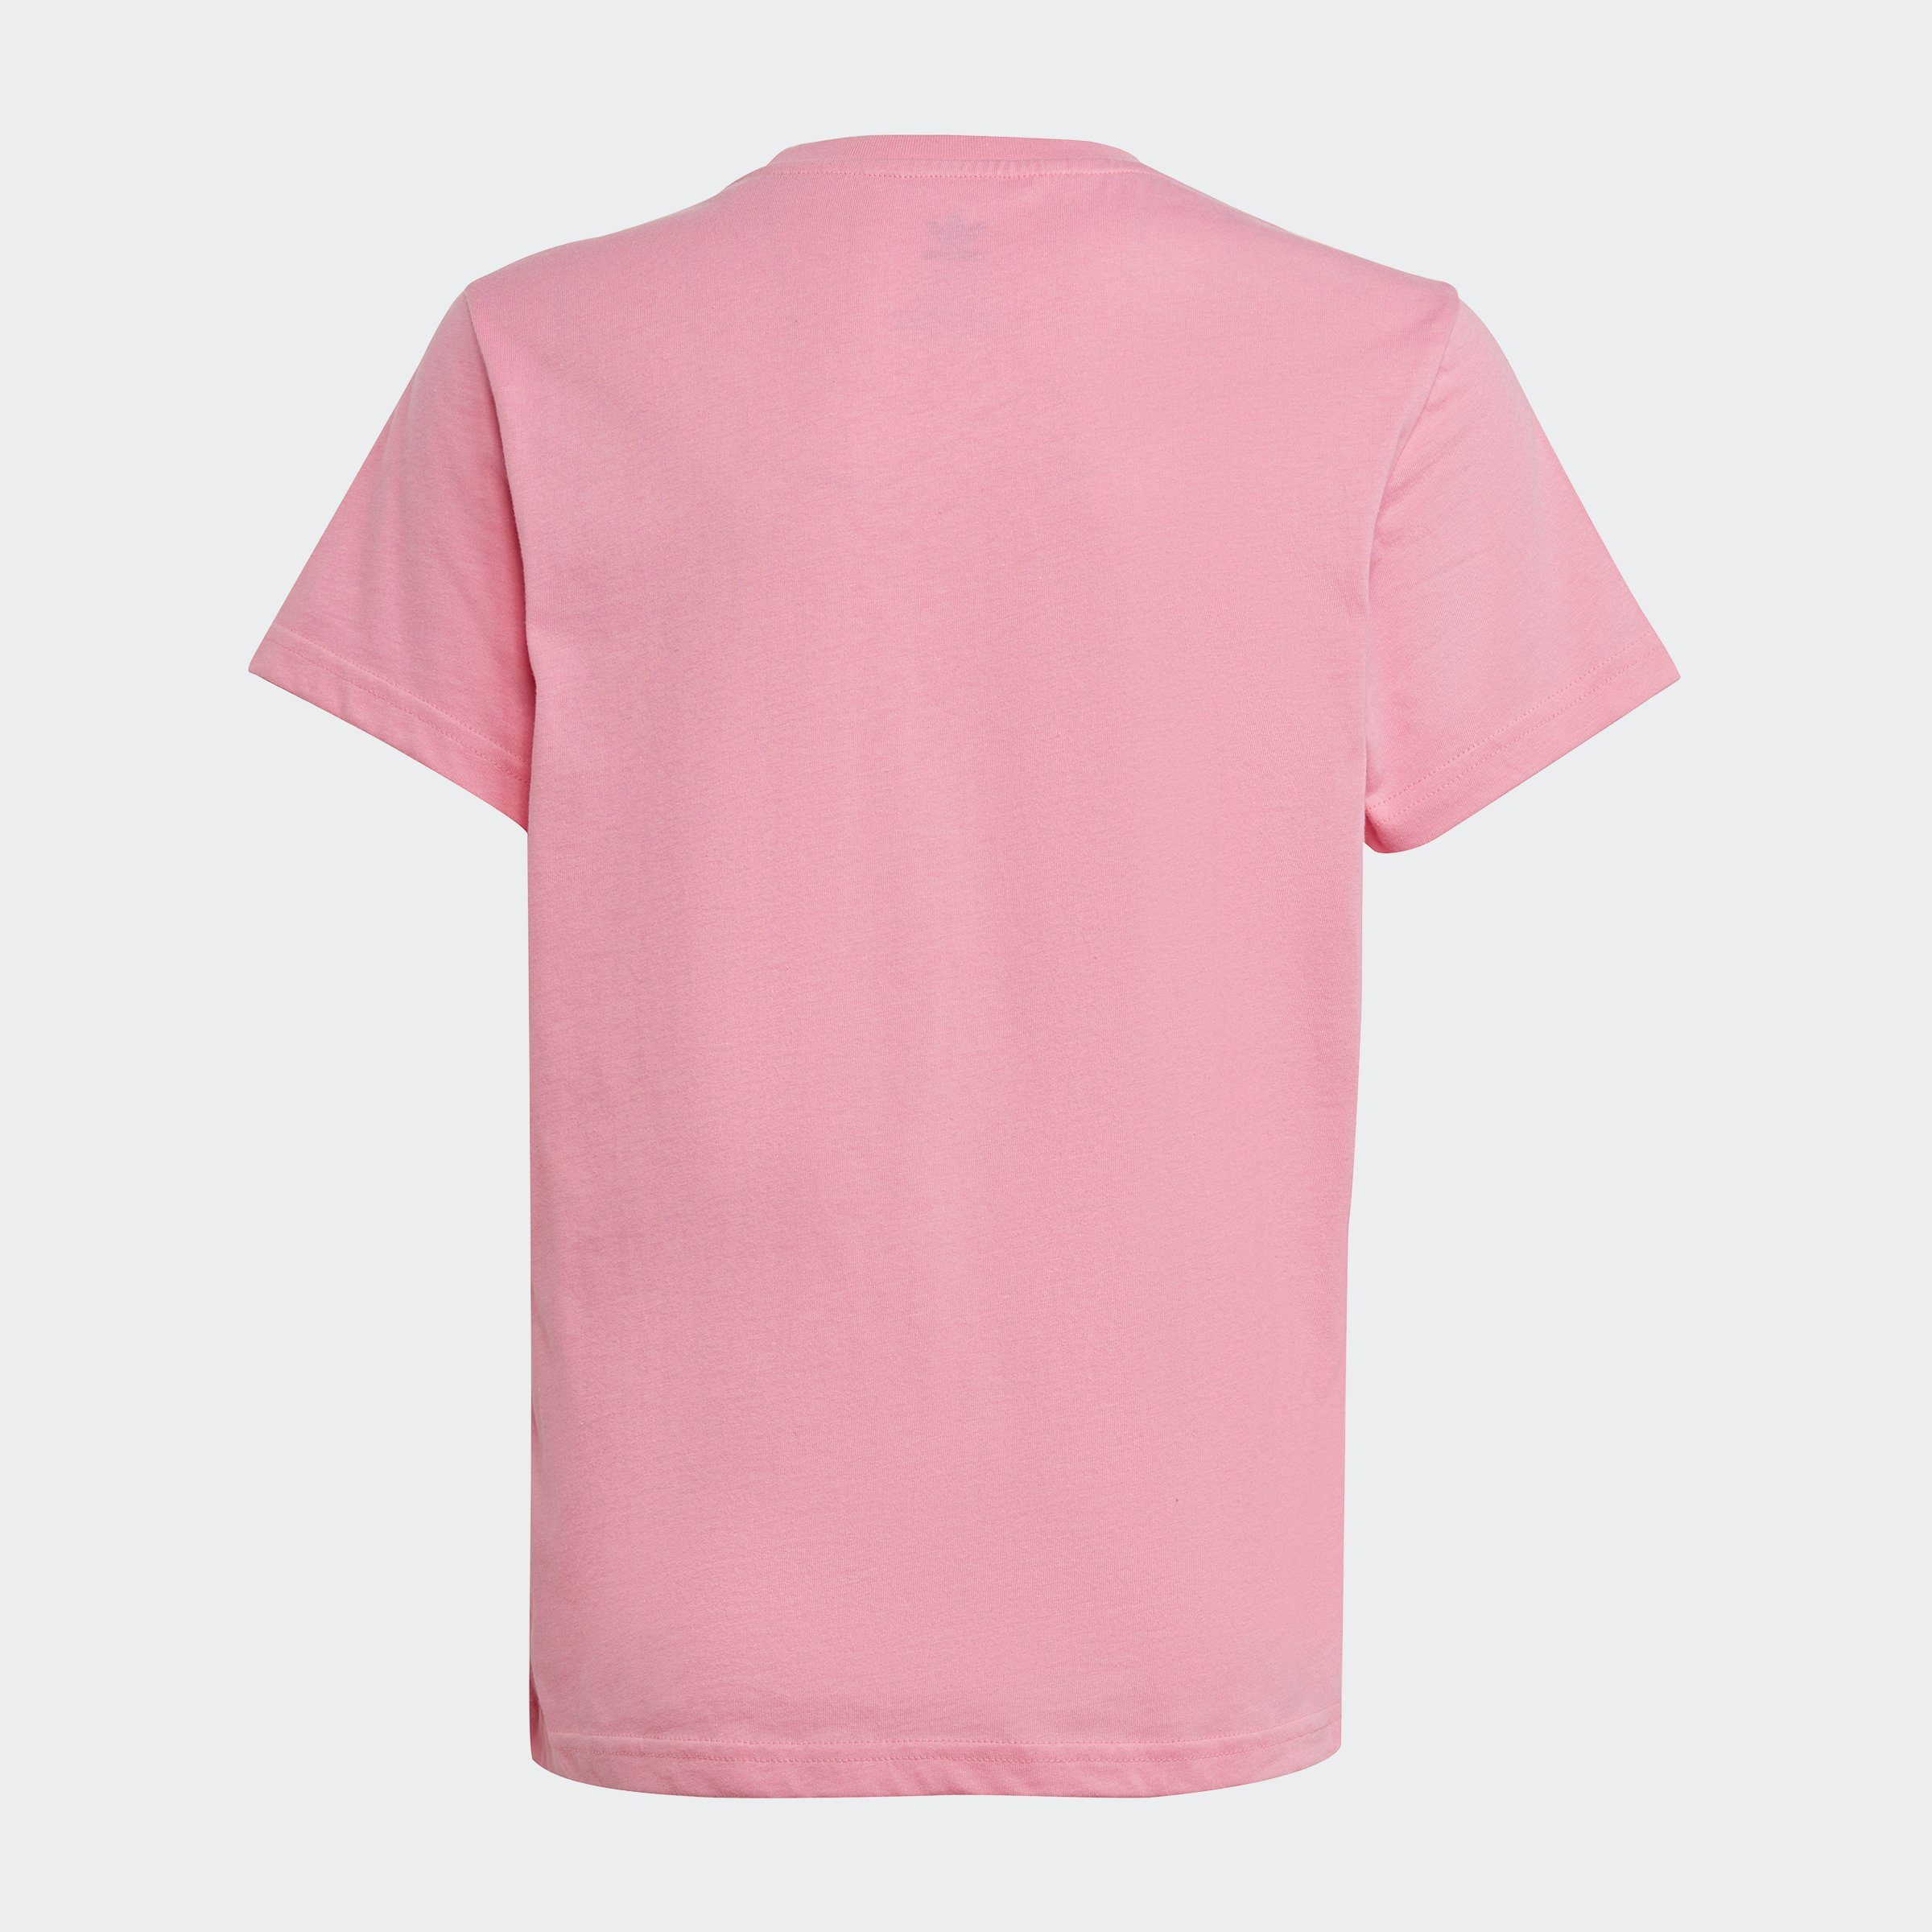 Originals Pink adidas TEE T-Shirt / Bliss White TREFOIL Unisex